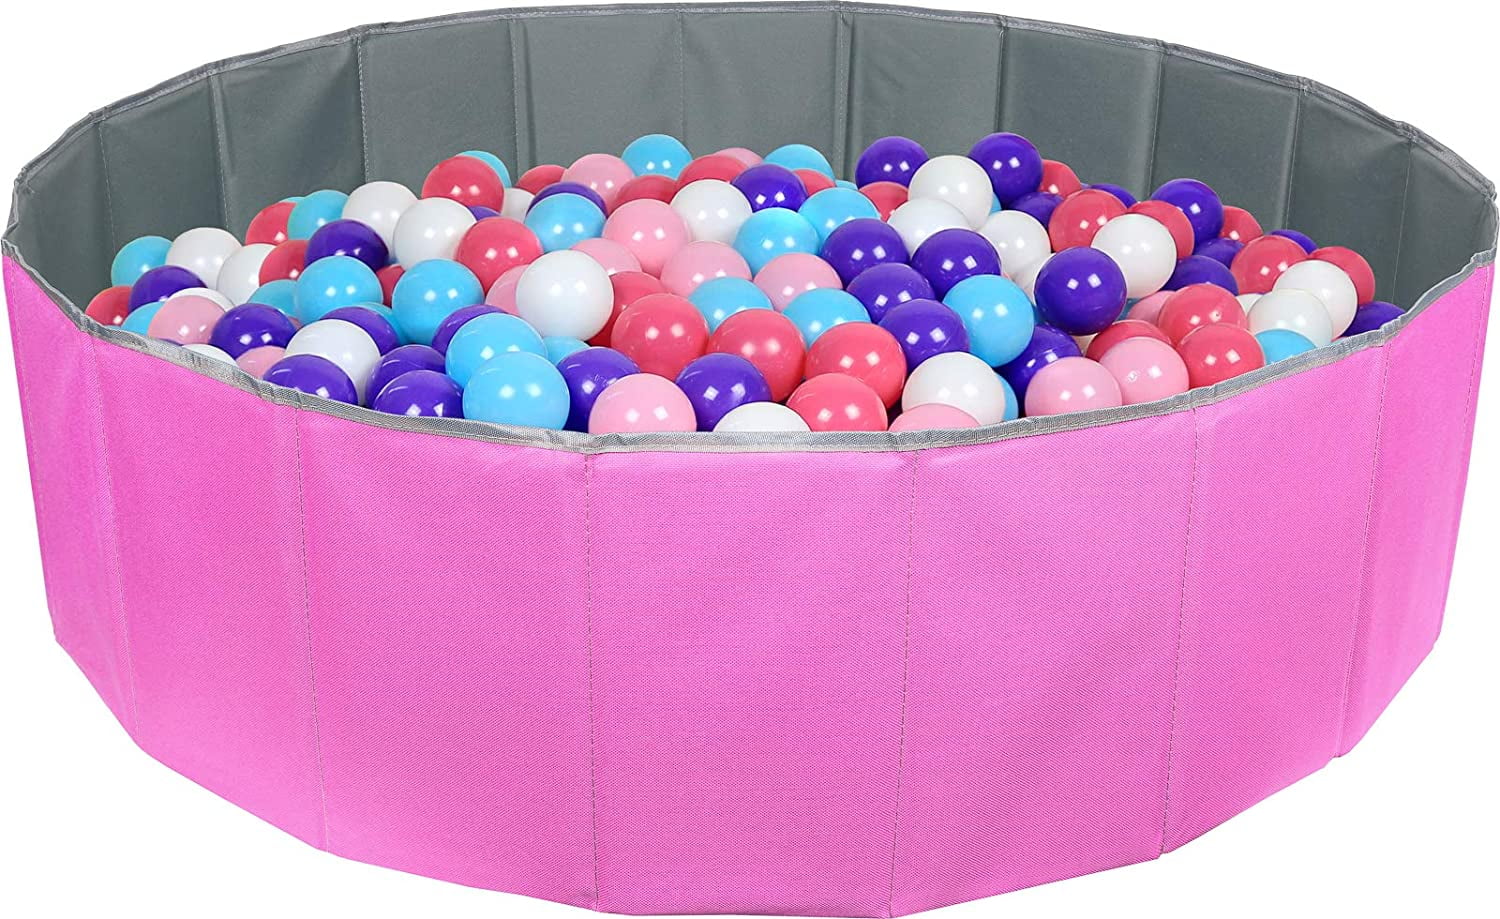 Avrsol Ball Pit Balls for Toddlers Kids Ball Playpen Soft Ball Pool Children Kiddie Pools Pink 